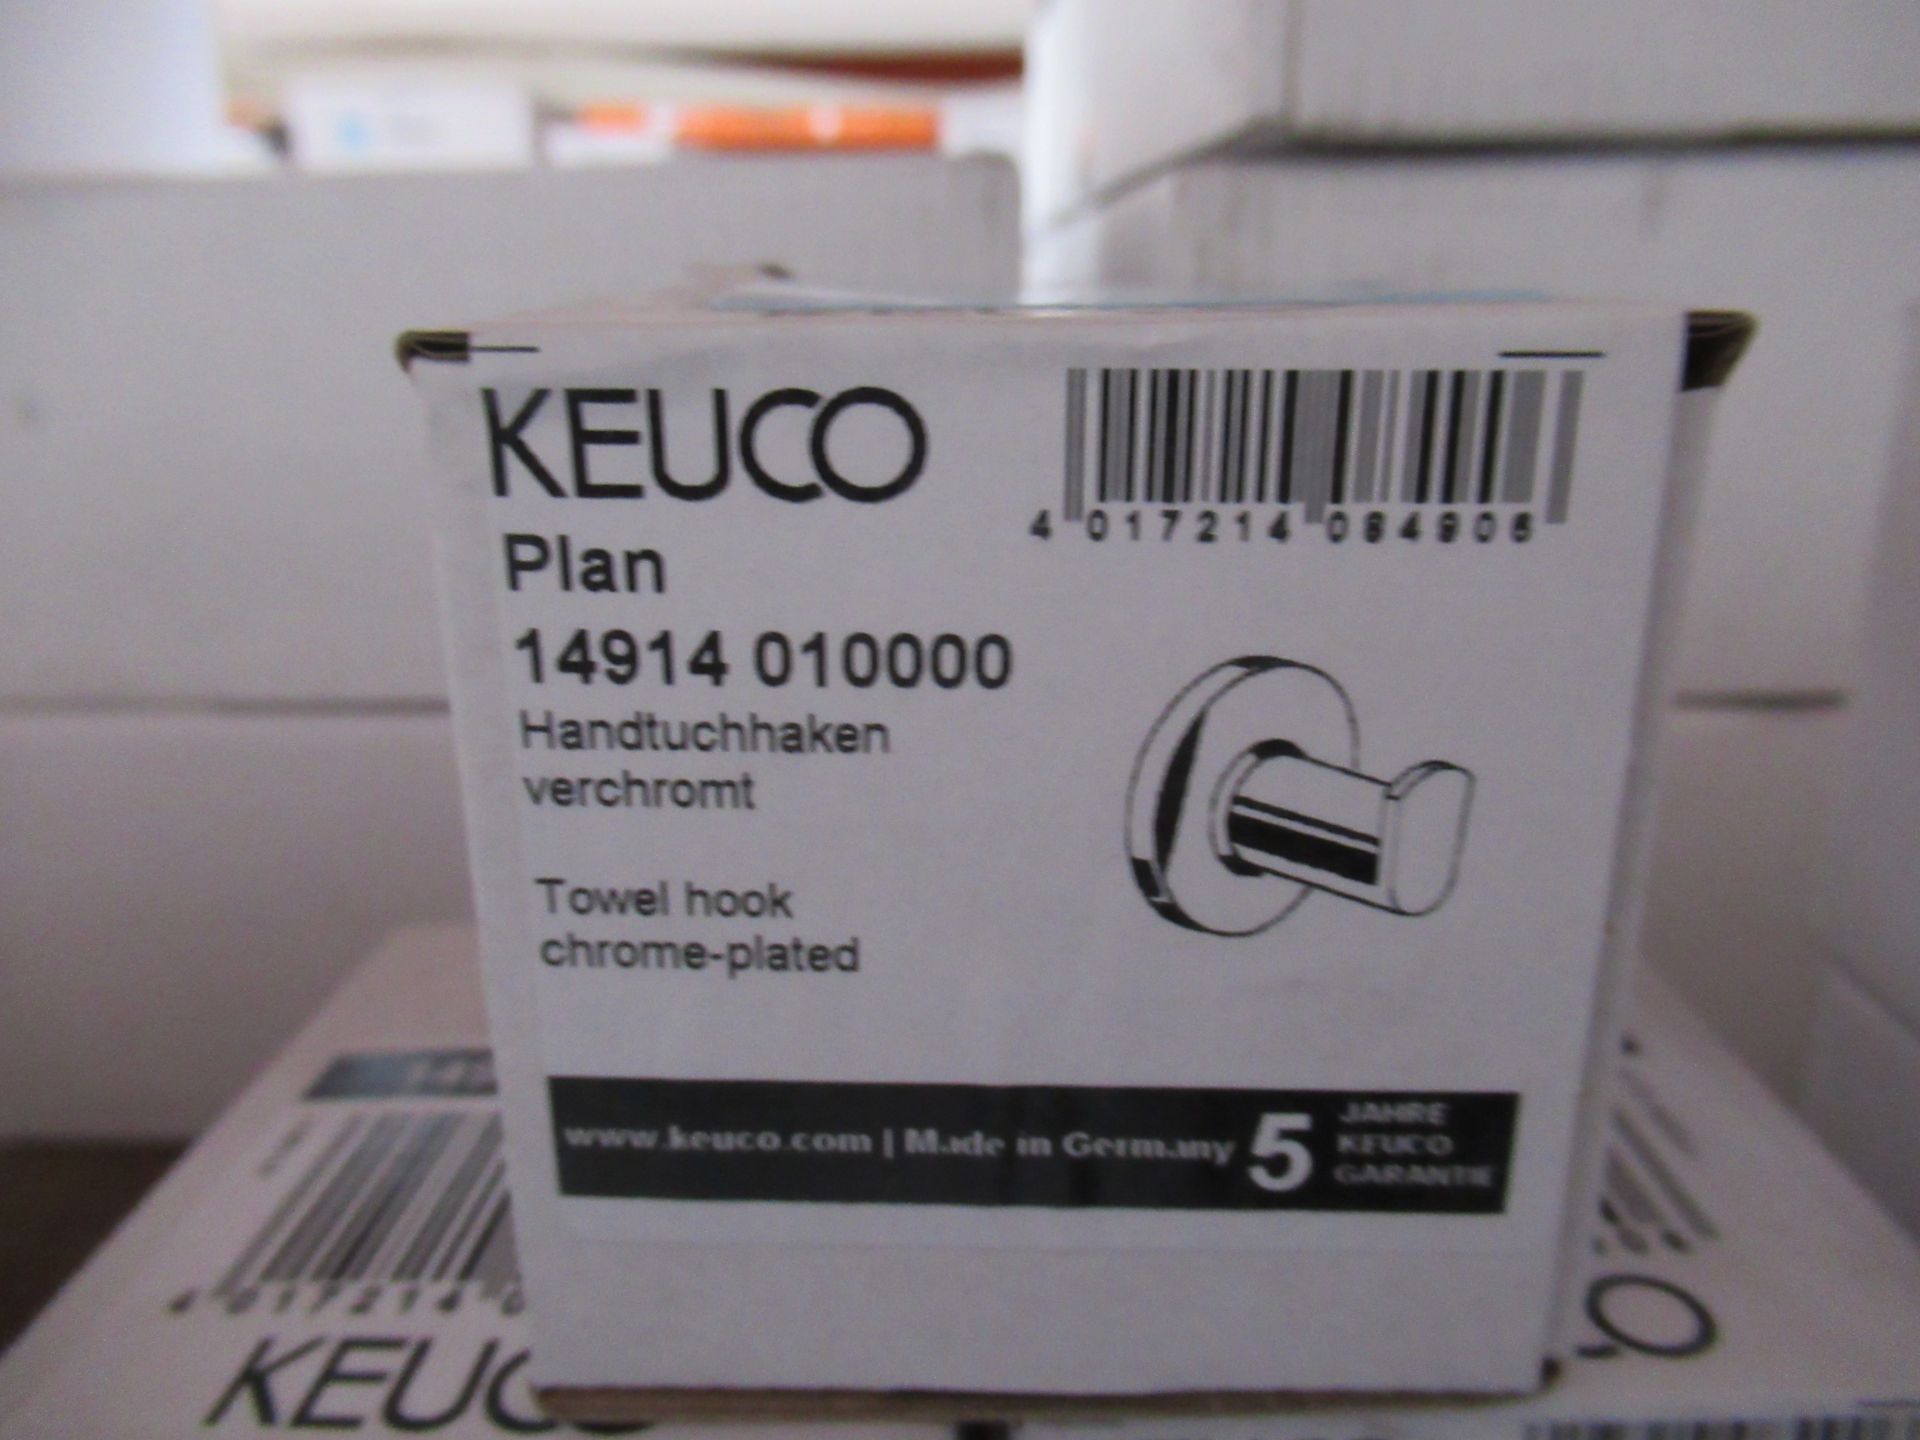 5 x Keuco Plan Towel Hook Chrome Plated, P/N 14914-010000 - Image 2 of 2